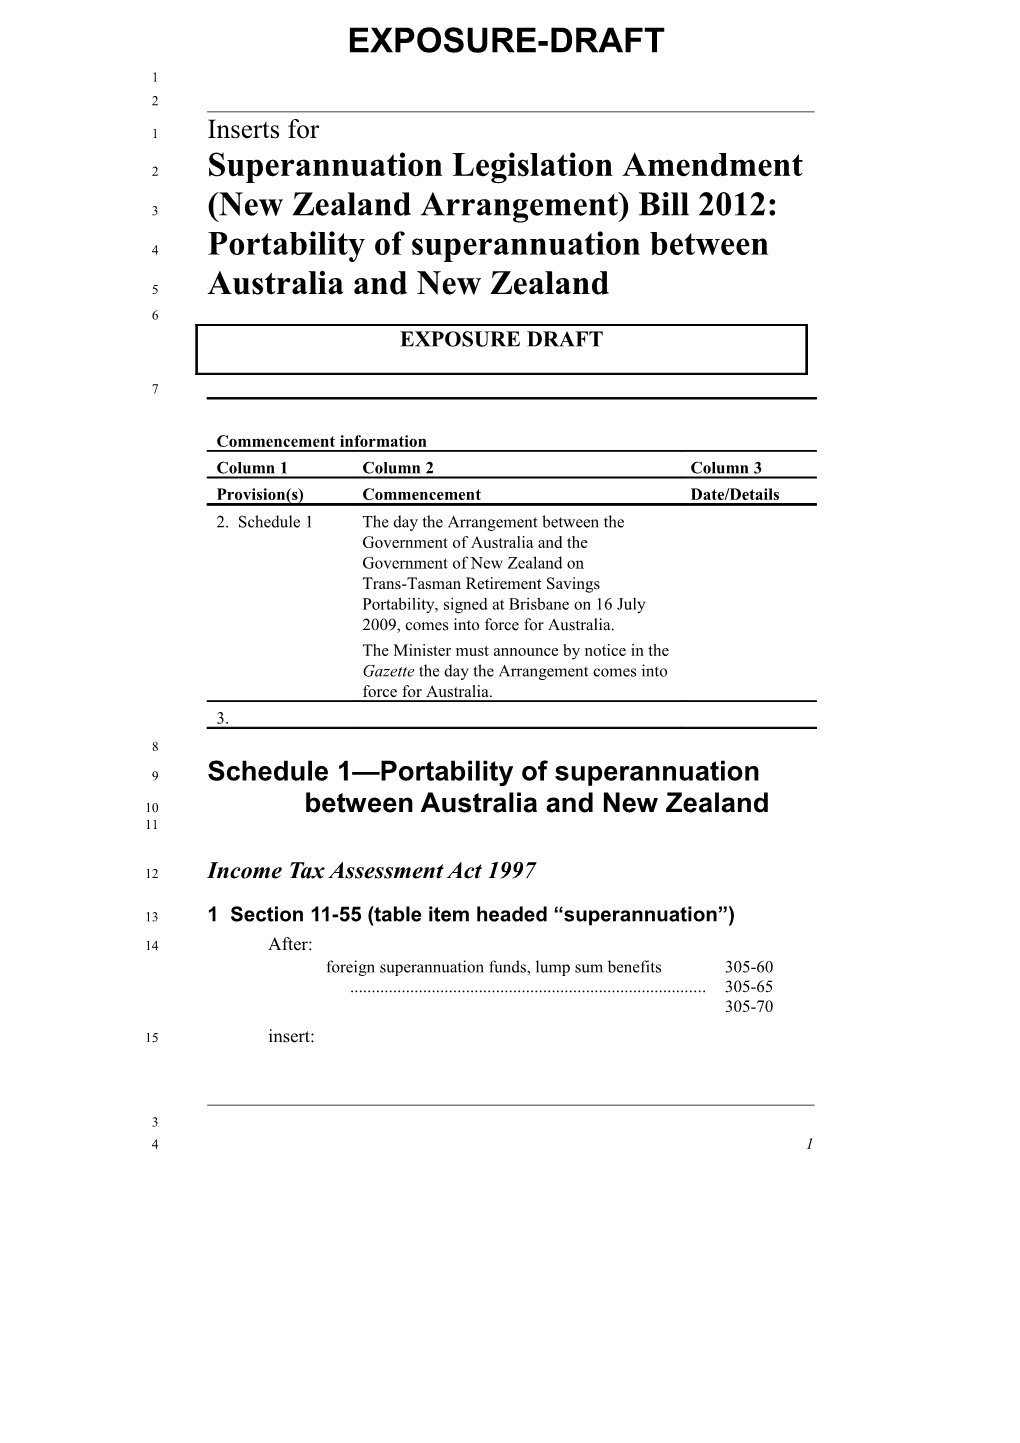 Schedule1 Portability of Superannuation Between Australia and New Zealand